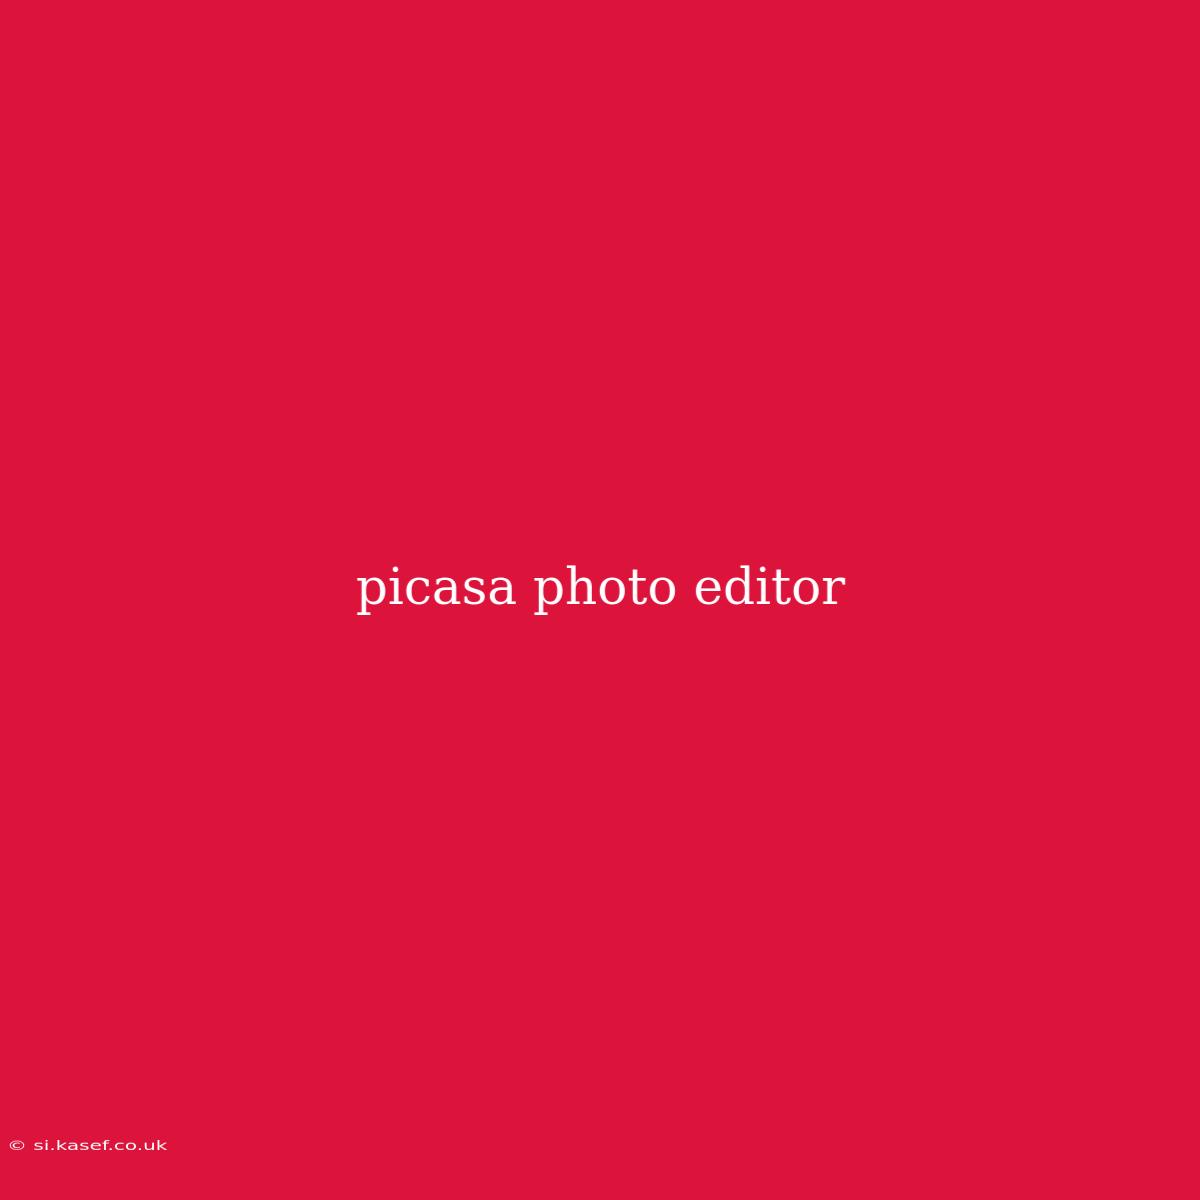 Picasa Photo Editor